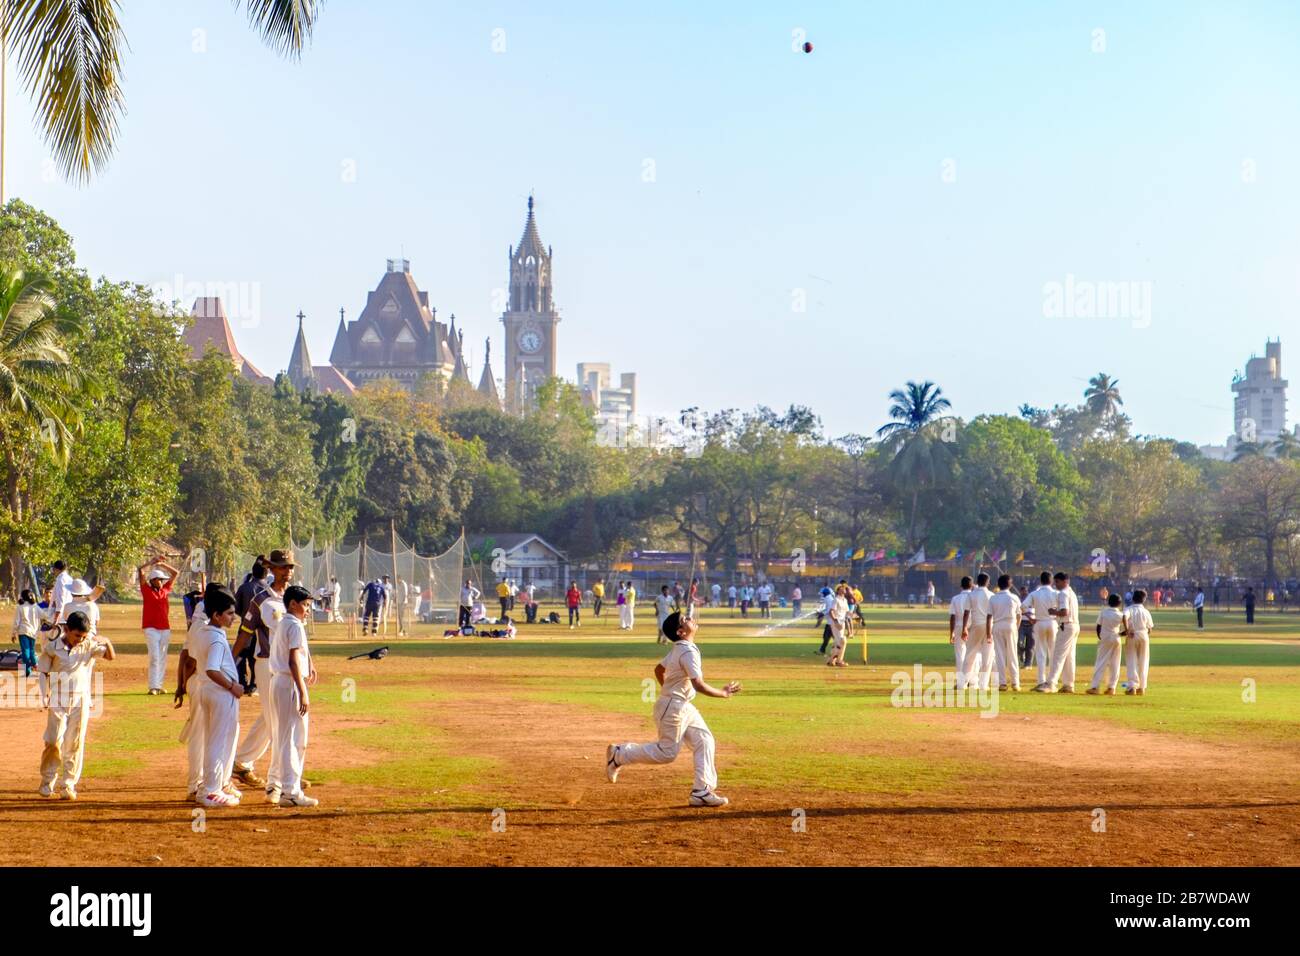 Cricket-Praxis auf dem Oval Maidan in Mumbai/Bombay, Indien Stockfoto